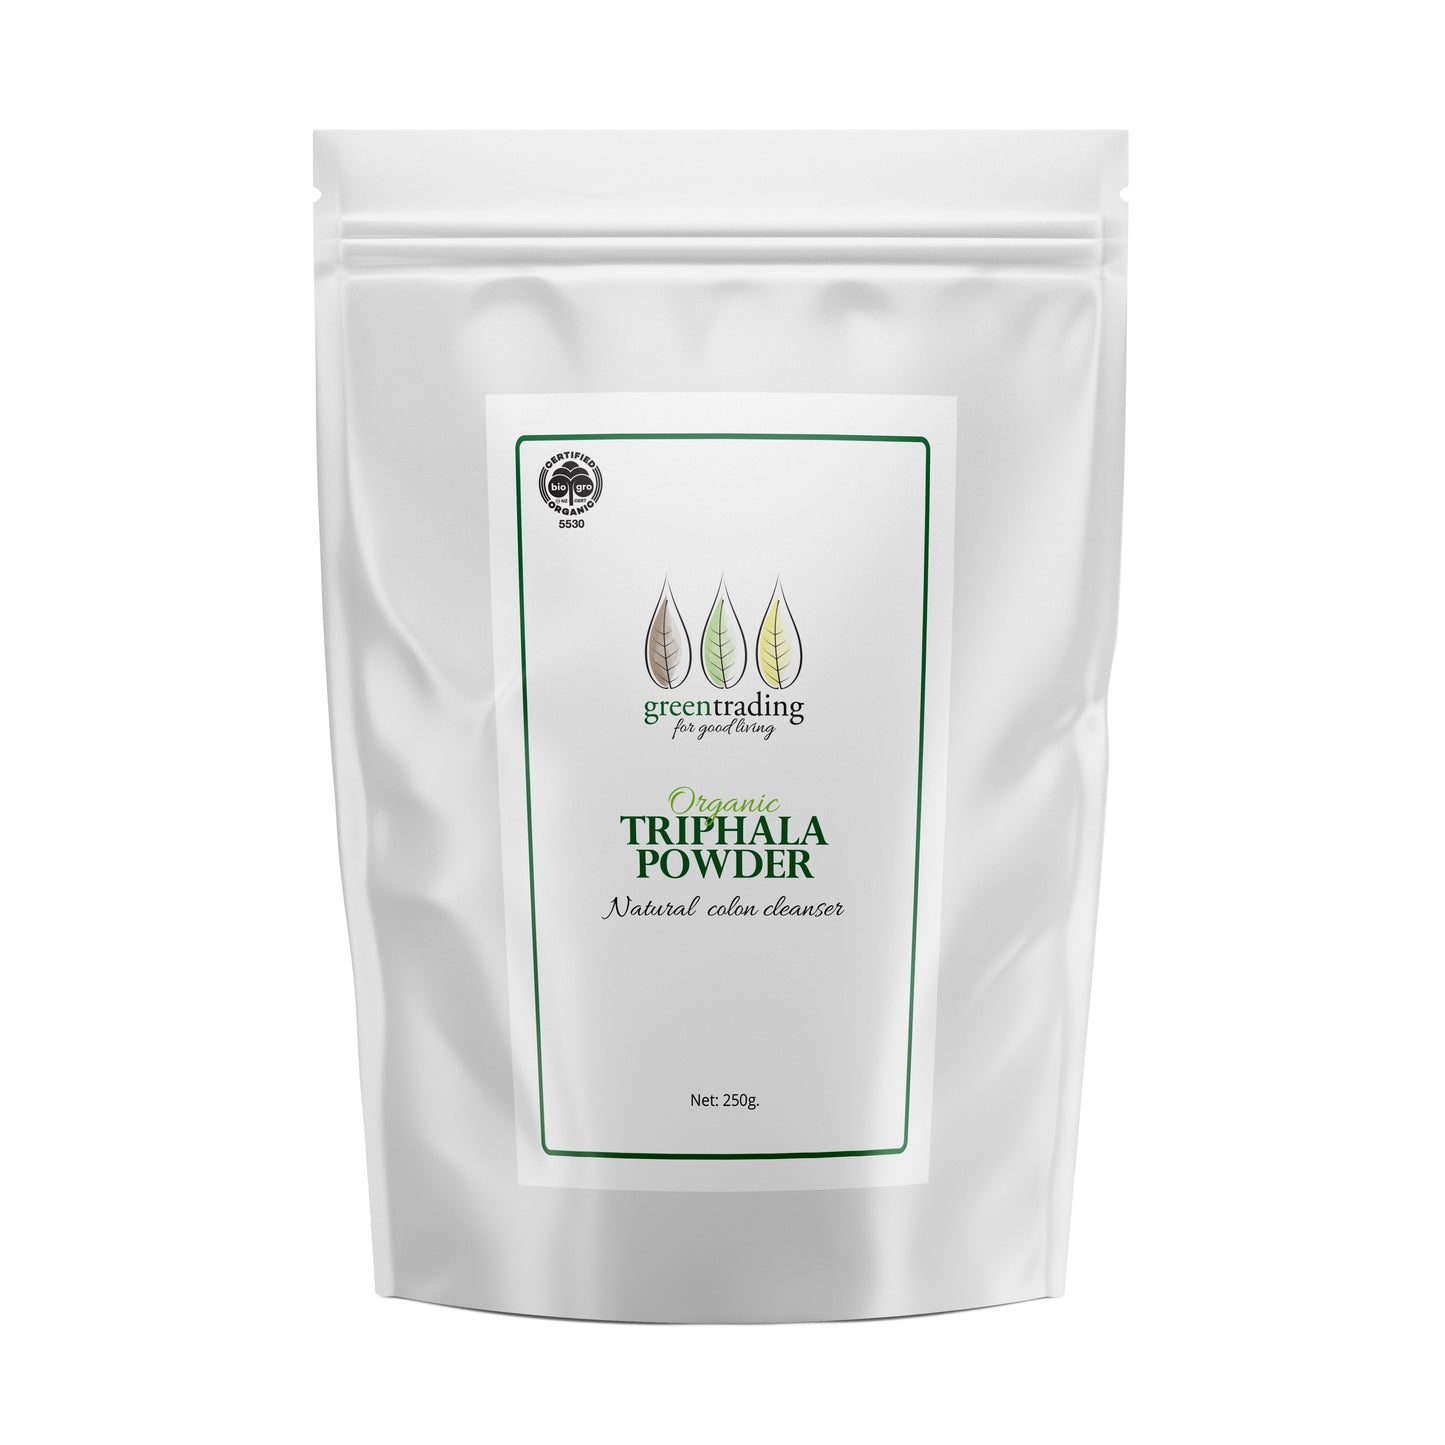 Organic Triphala Powder 250g - greentradingaustralia